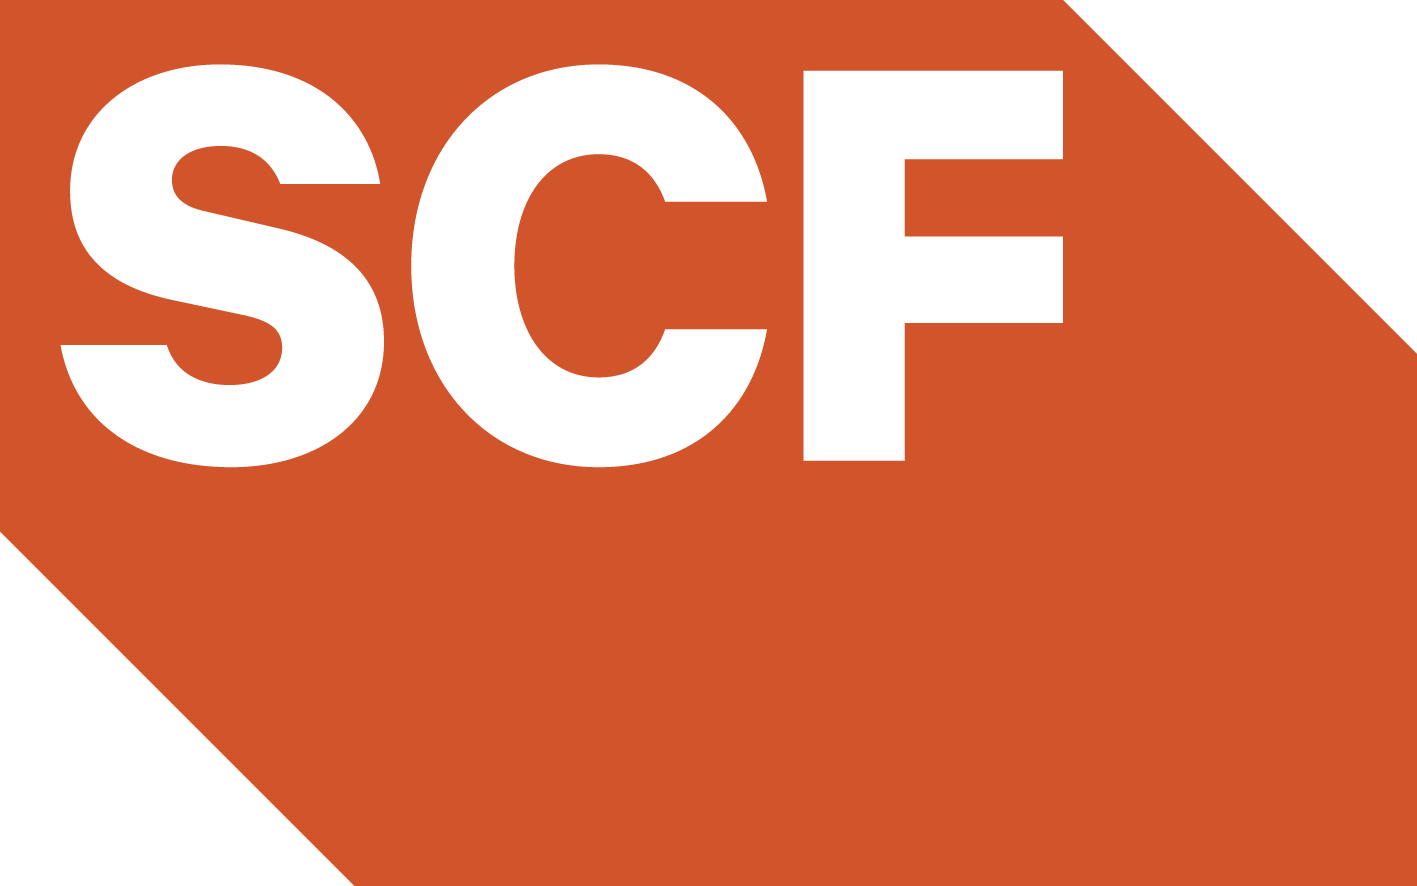 SCF Logo - Scf Competitors, Revenue and Employees Company Profile